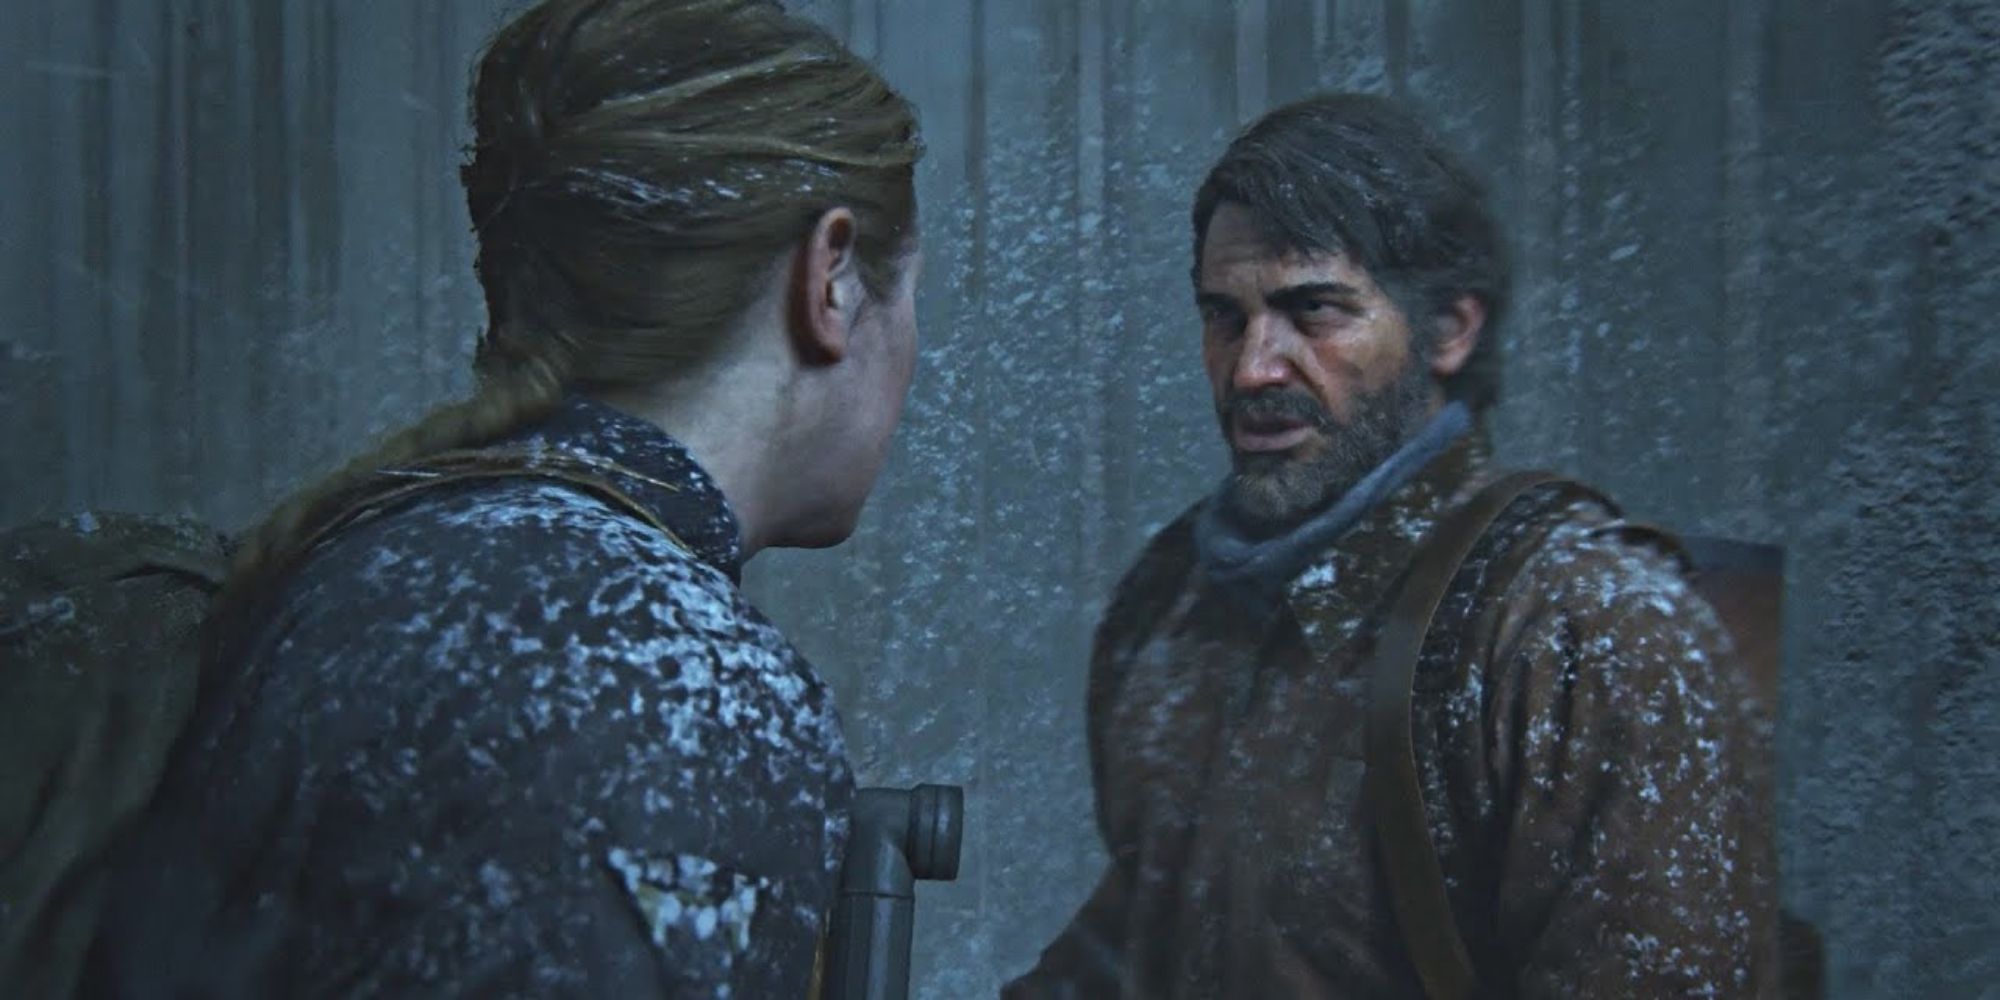 Joel encountering Abby in the snow